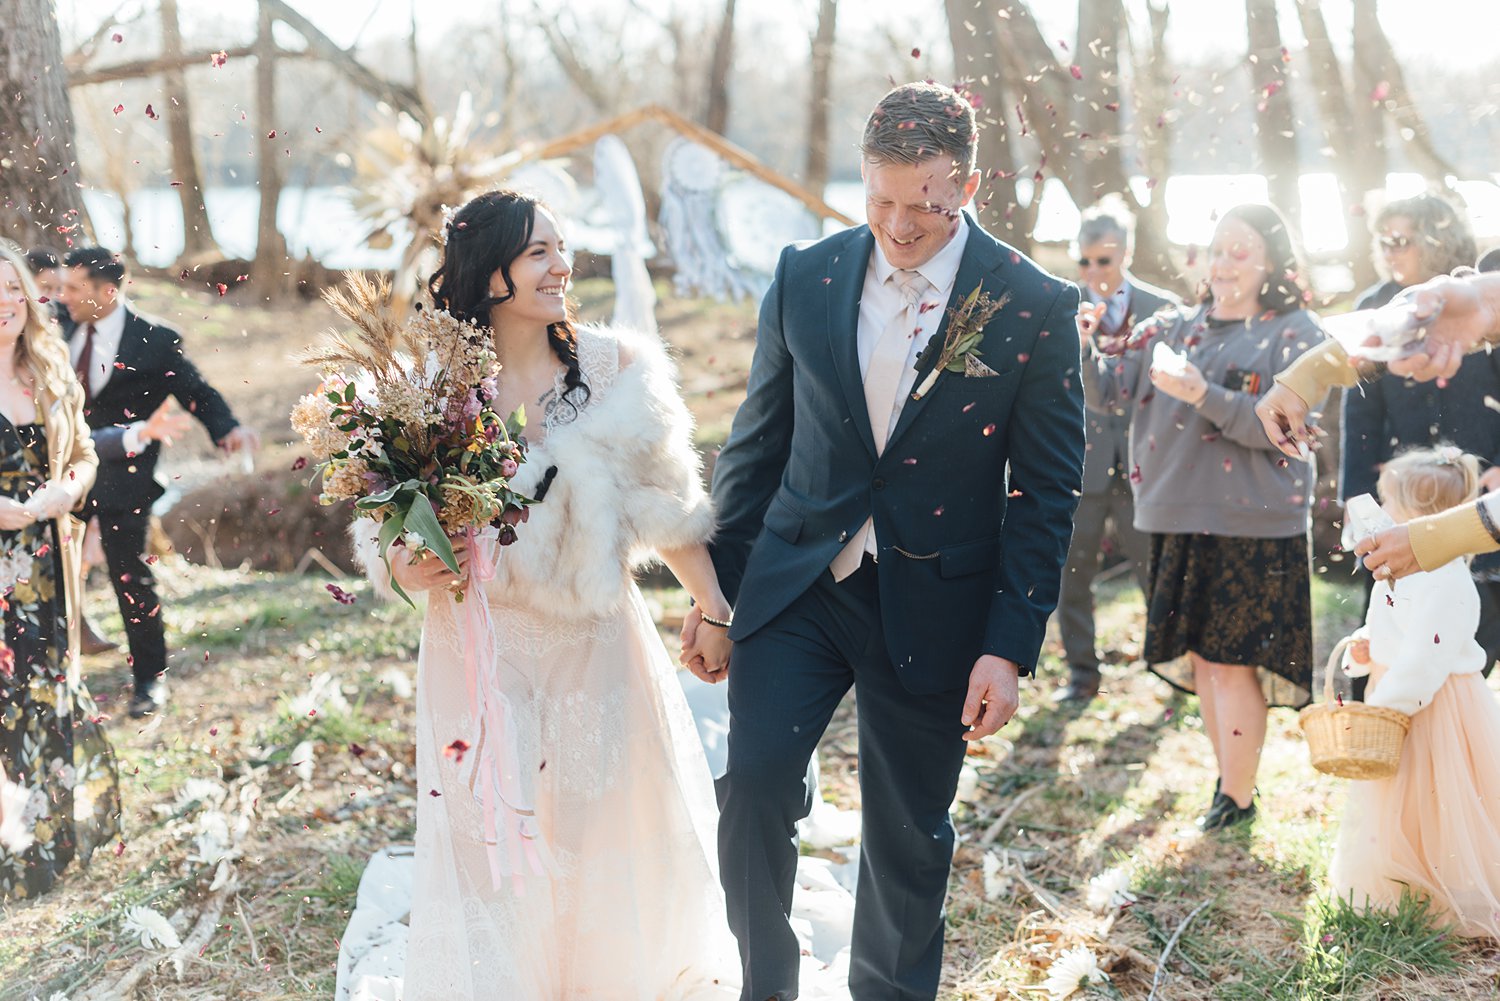 Dara + John - Pennyfield Lock Wedding - Potomac Maryland family photographer - Alison Dunn Photography photo